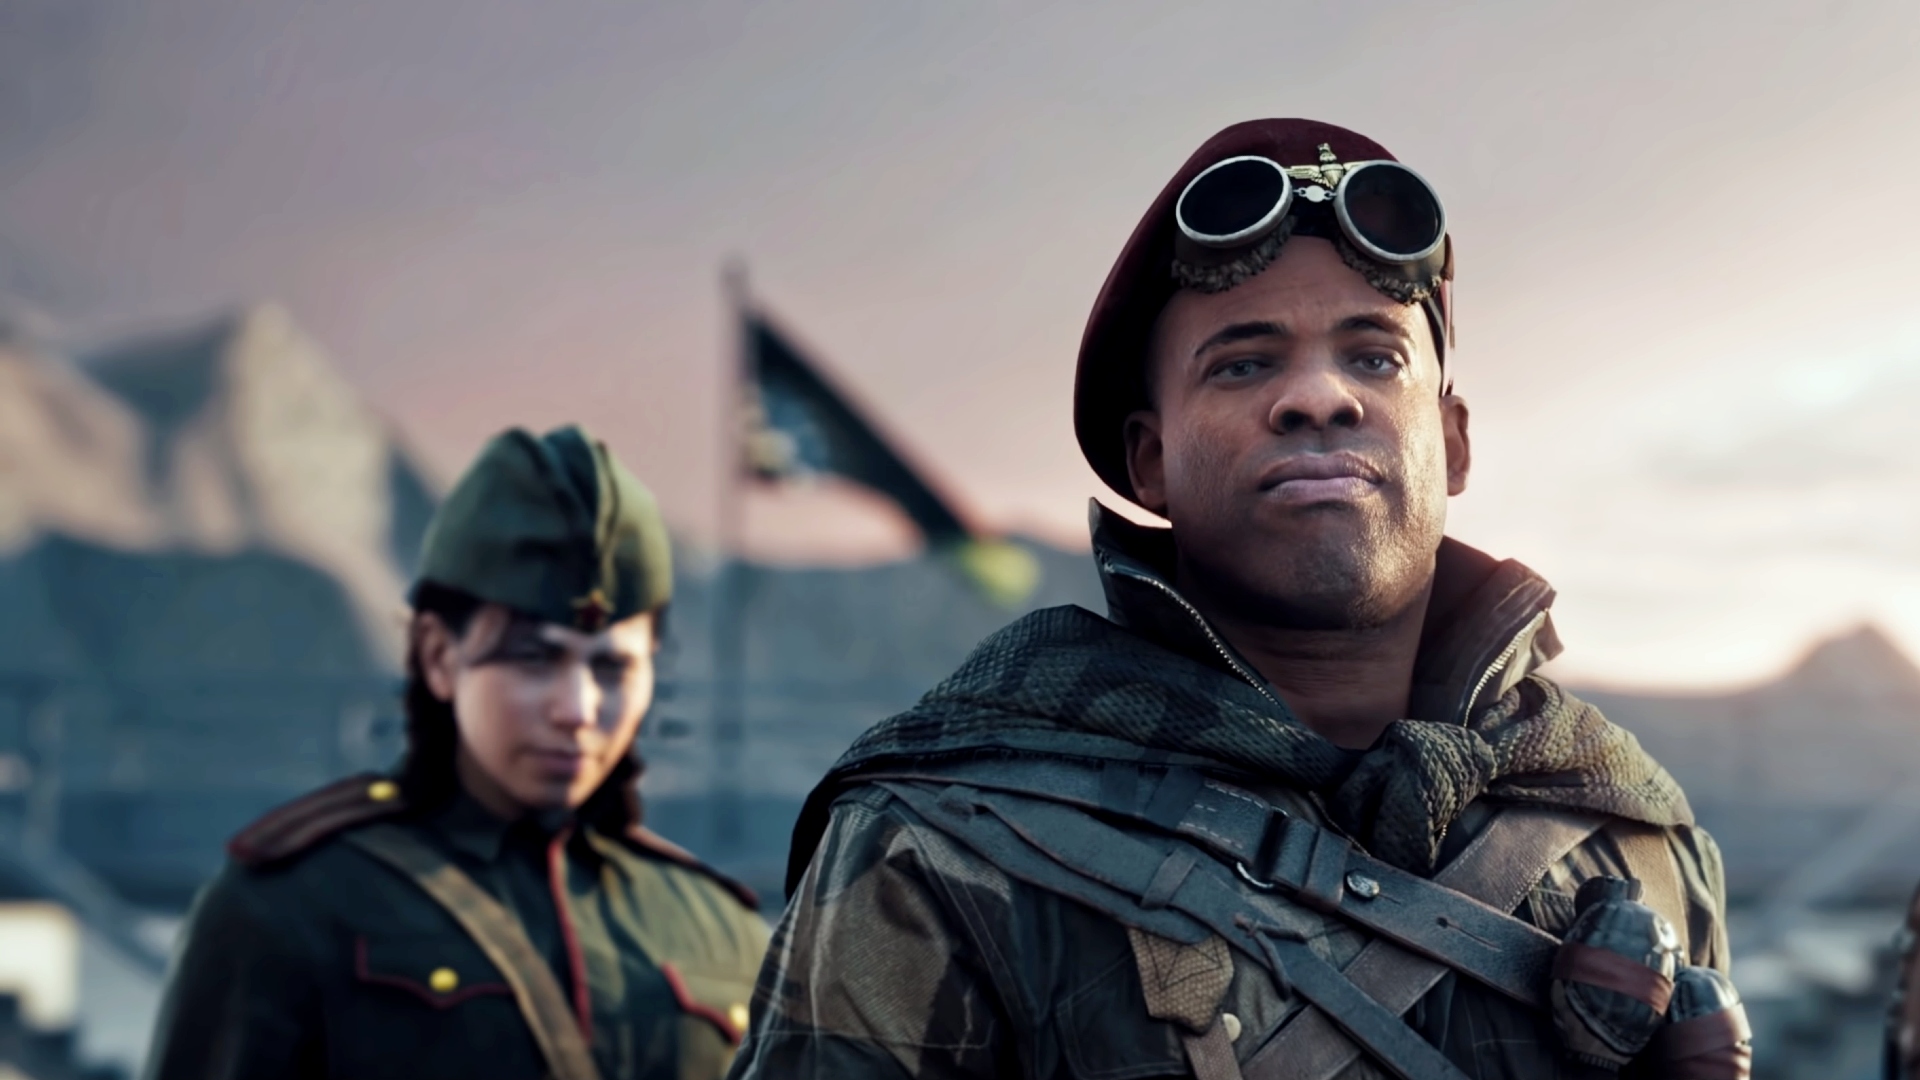 Call Of Duty: WW2 Campaign Length Estimate - GameSpot